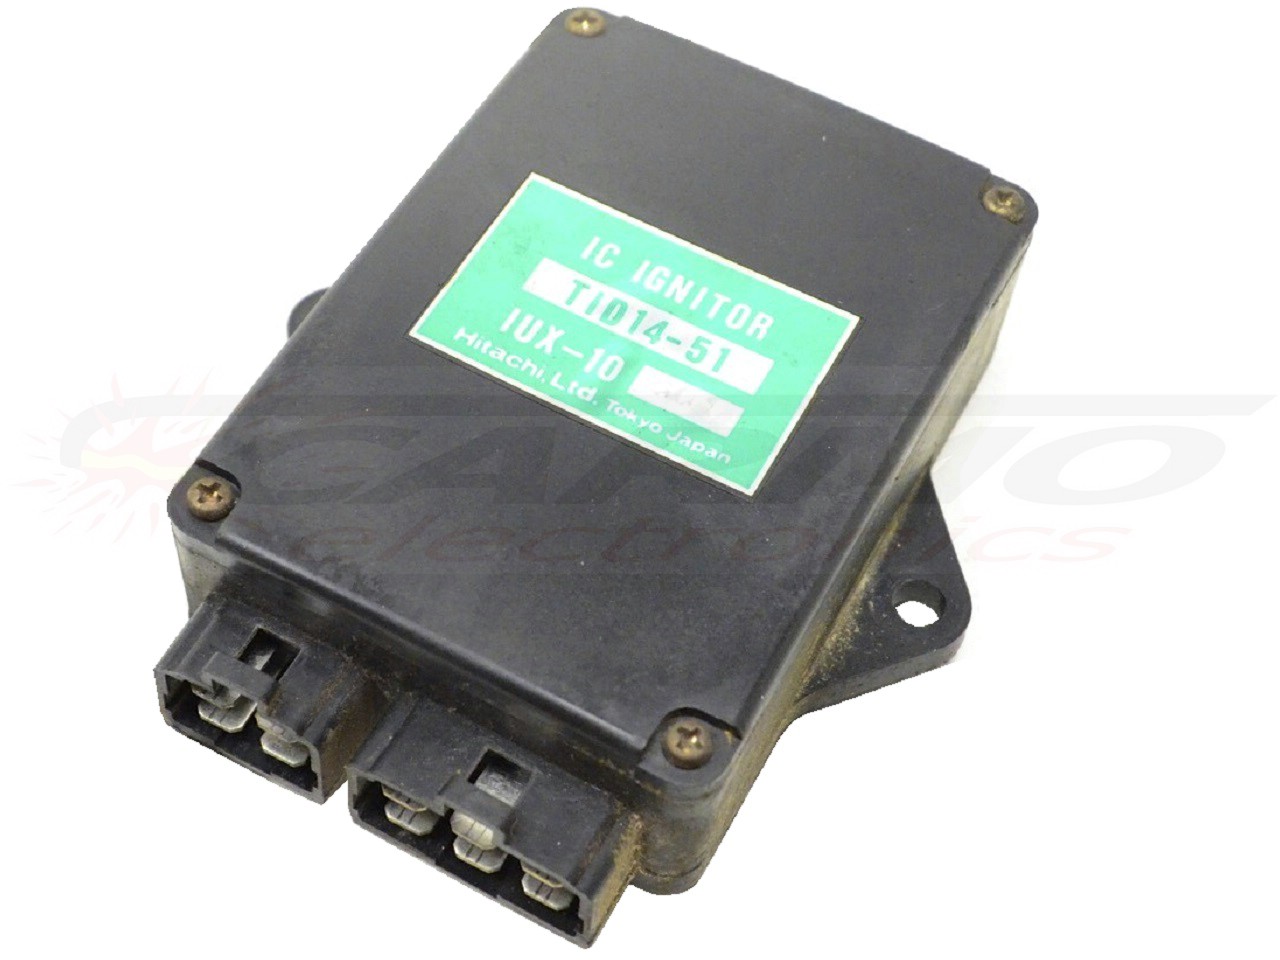 FJ1100 igniter ignition module CDI TCI Box Hitachi TID14-51 1UX